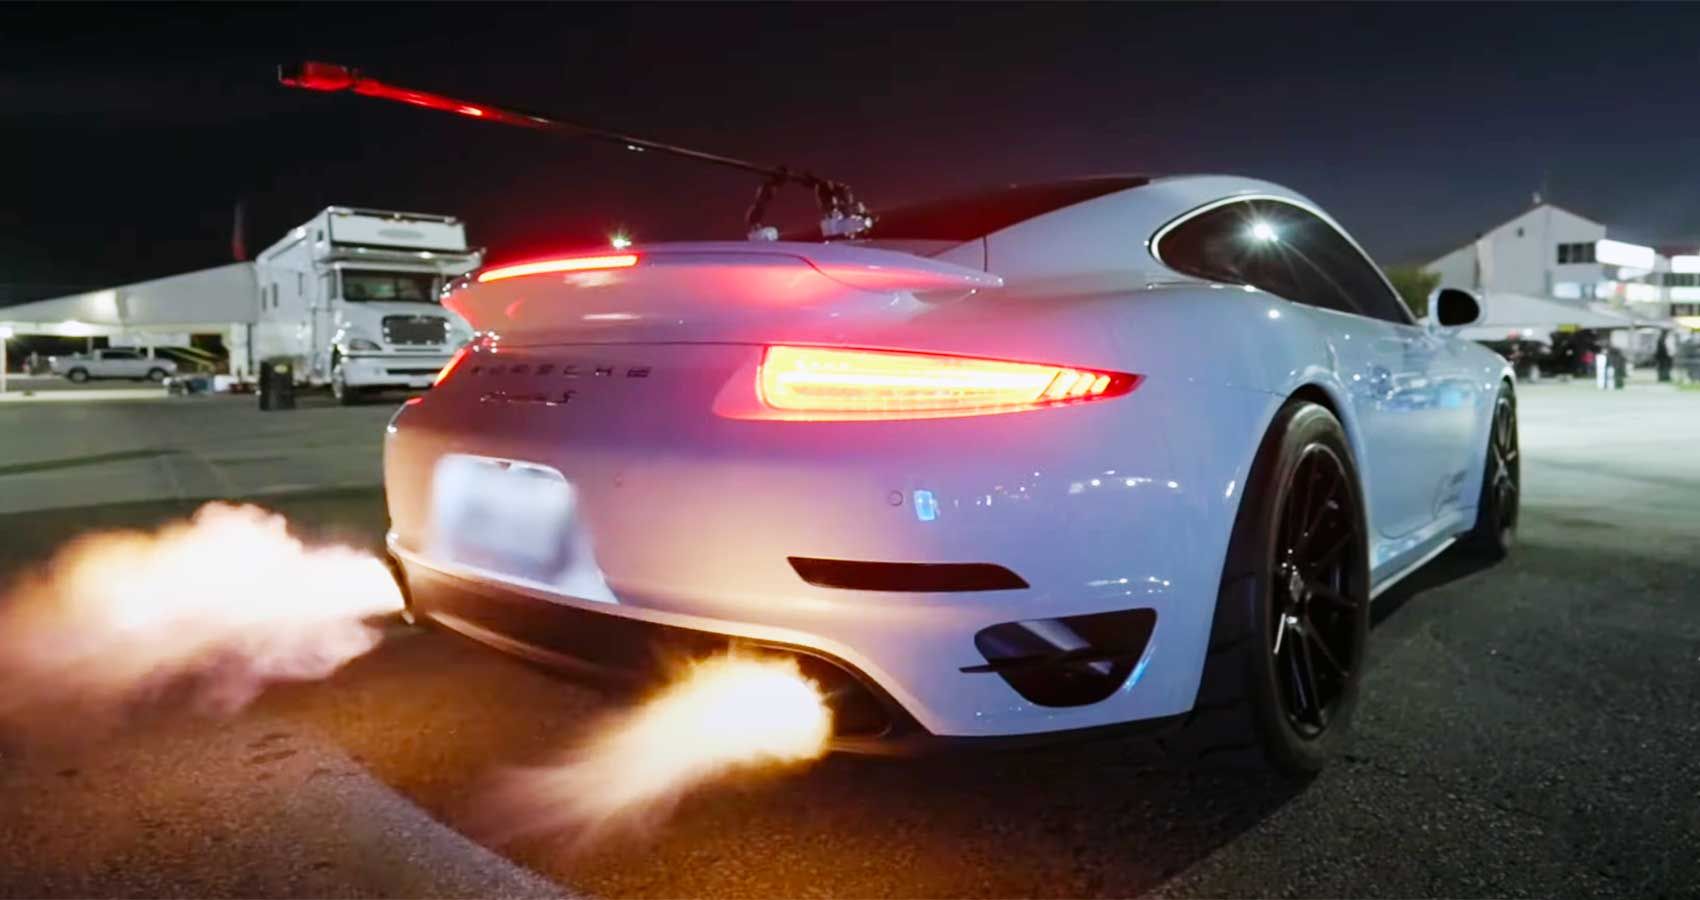 White Porsche 911 Turbo S Shooting flames